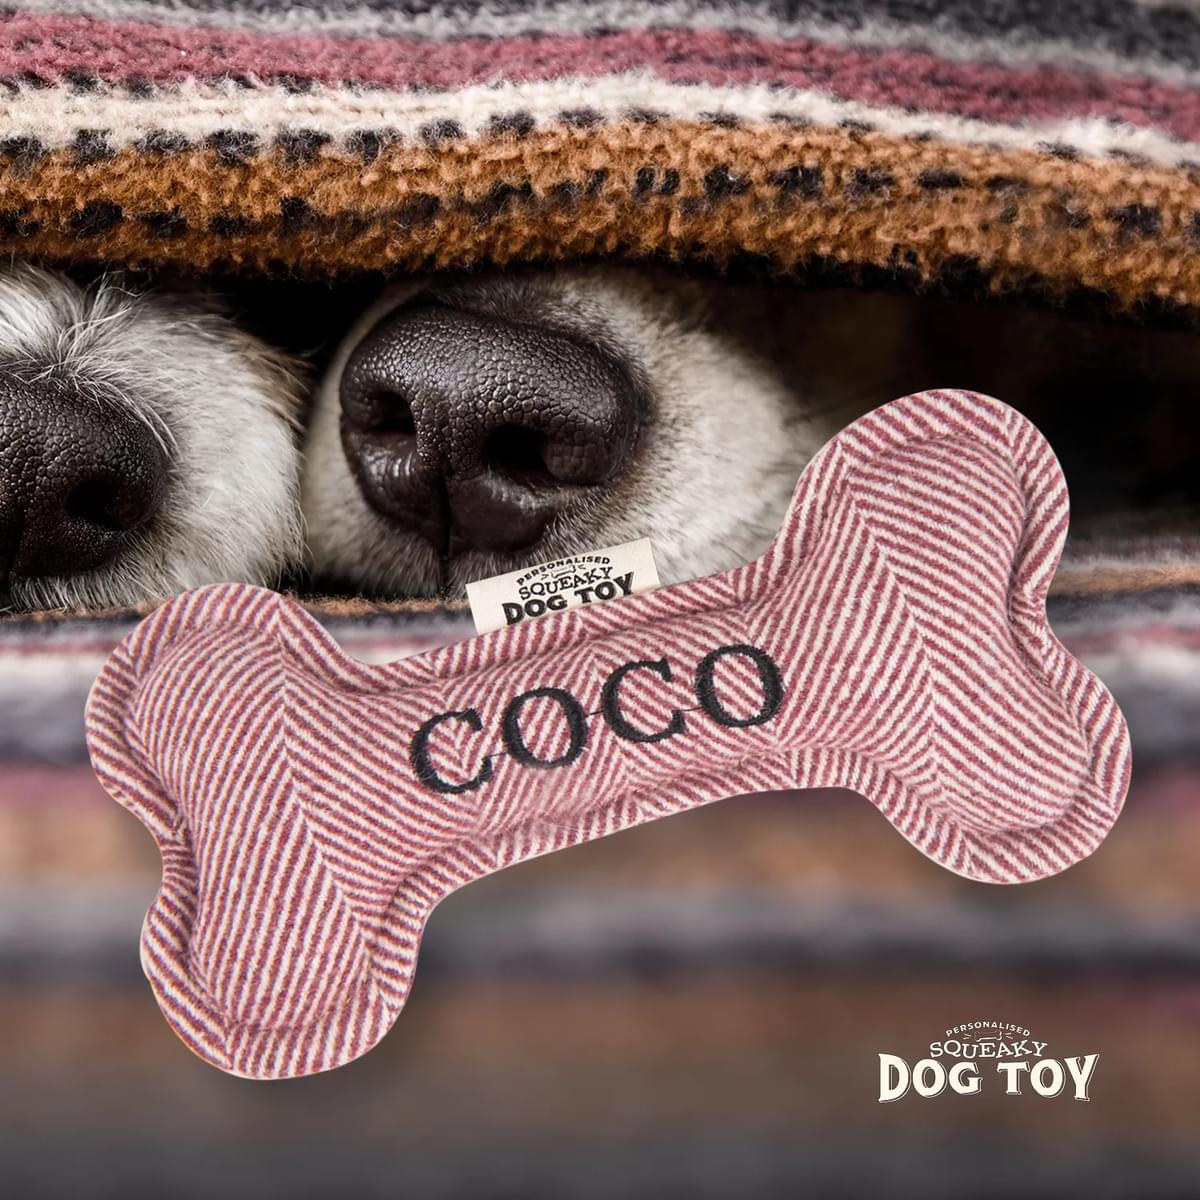 Named Squeaky Dog Toy- Coco. Bone shaped herringbone tweed pattern dog toy. 